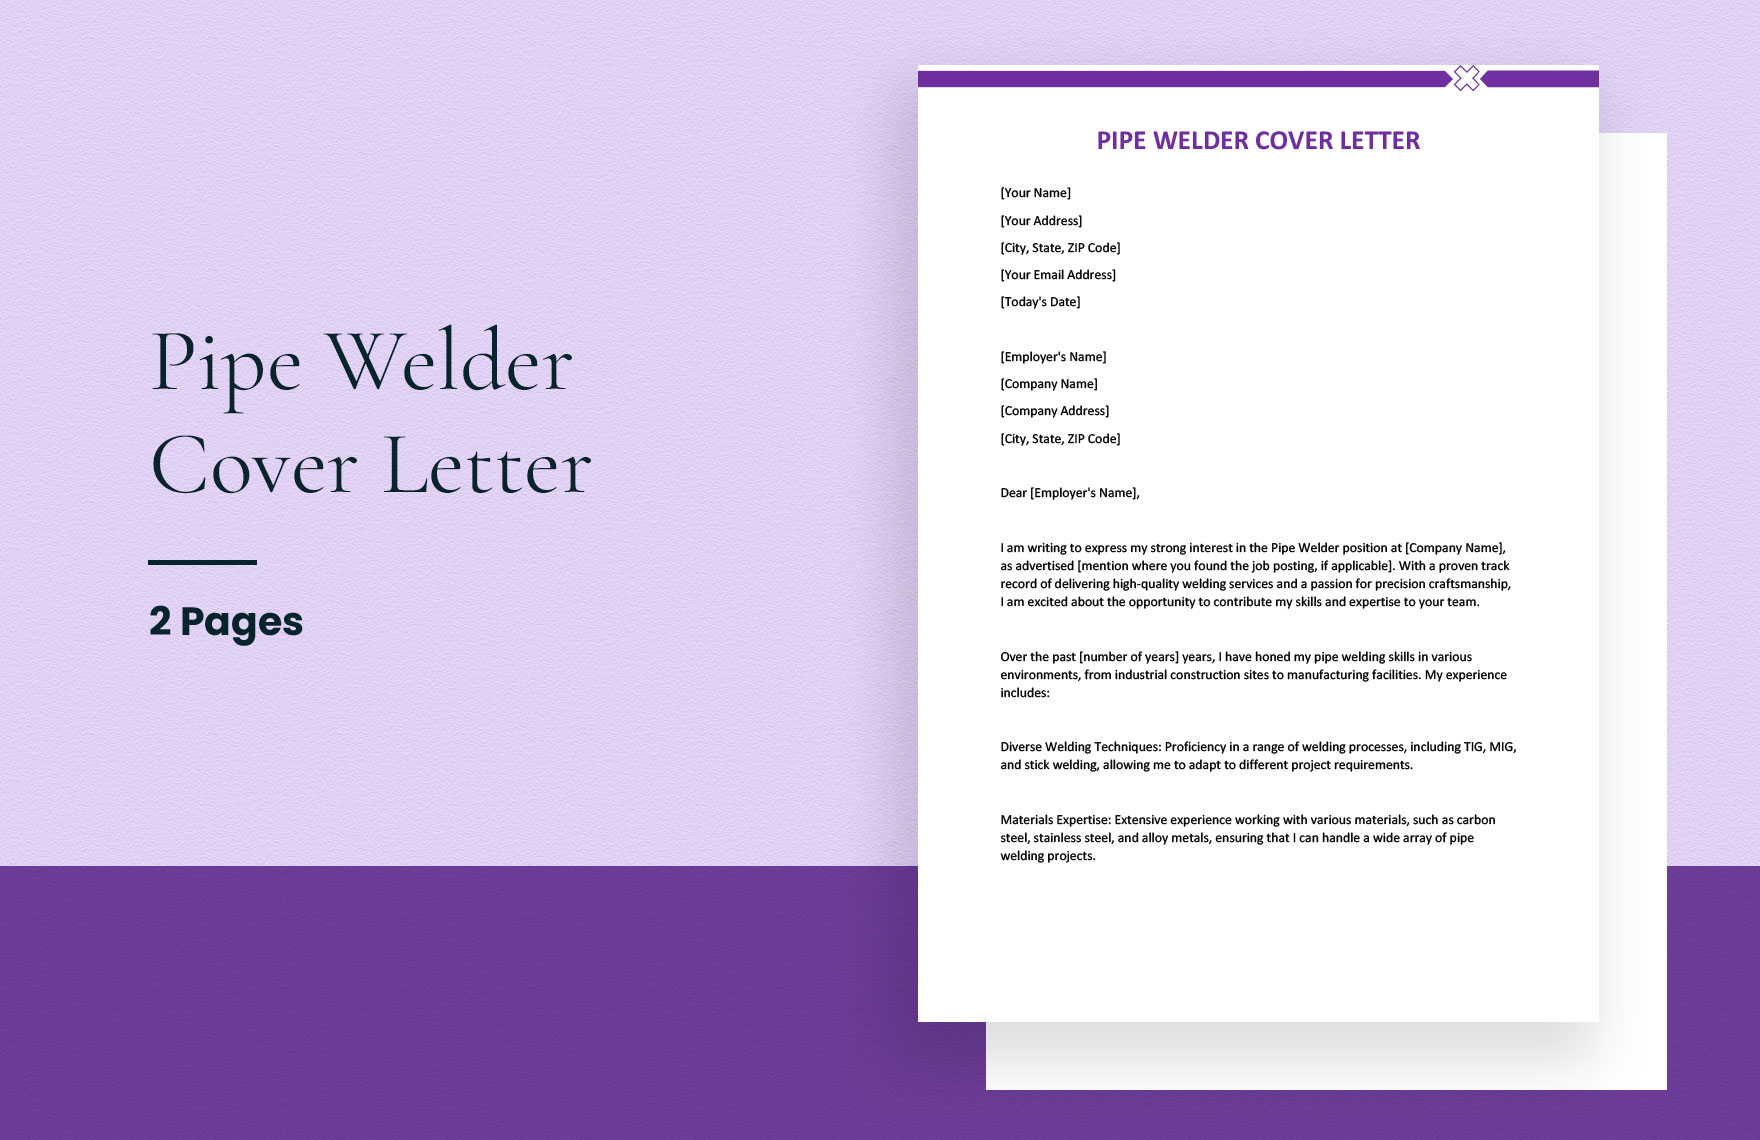 Pipe Welder Cover Letter in Word, Google Docs